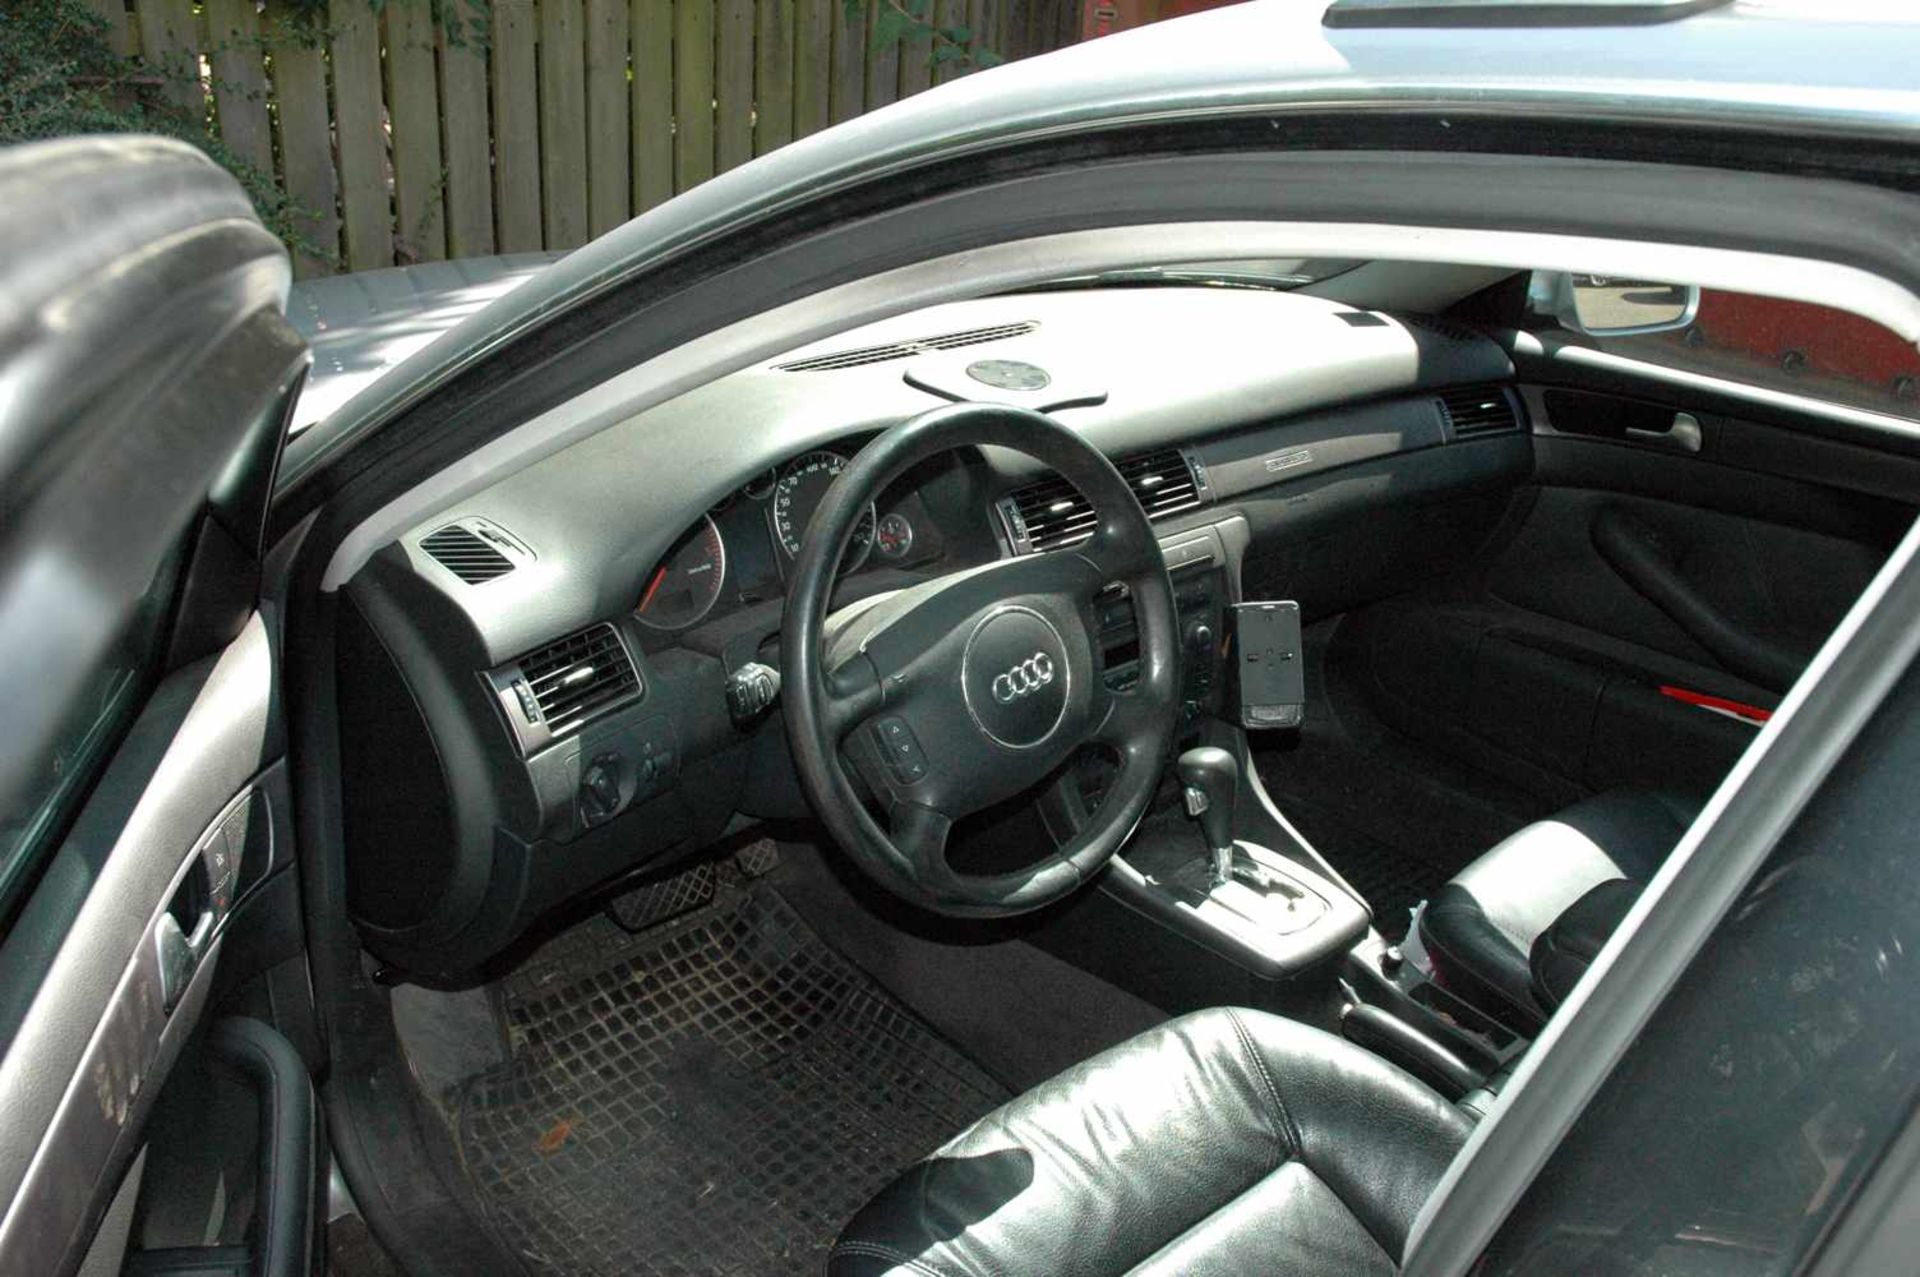 PKW, Audi A6, EZ 03/2004, silber metallic, Automatik, TÜV 04/19, Lederausstattung, Diesel - Bild 7 aus 11